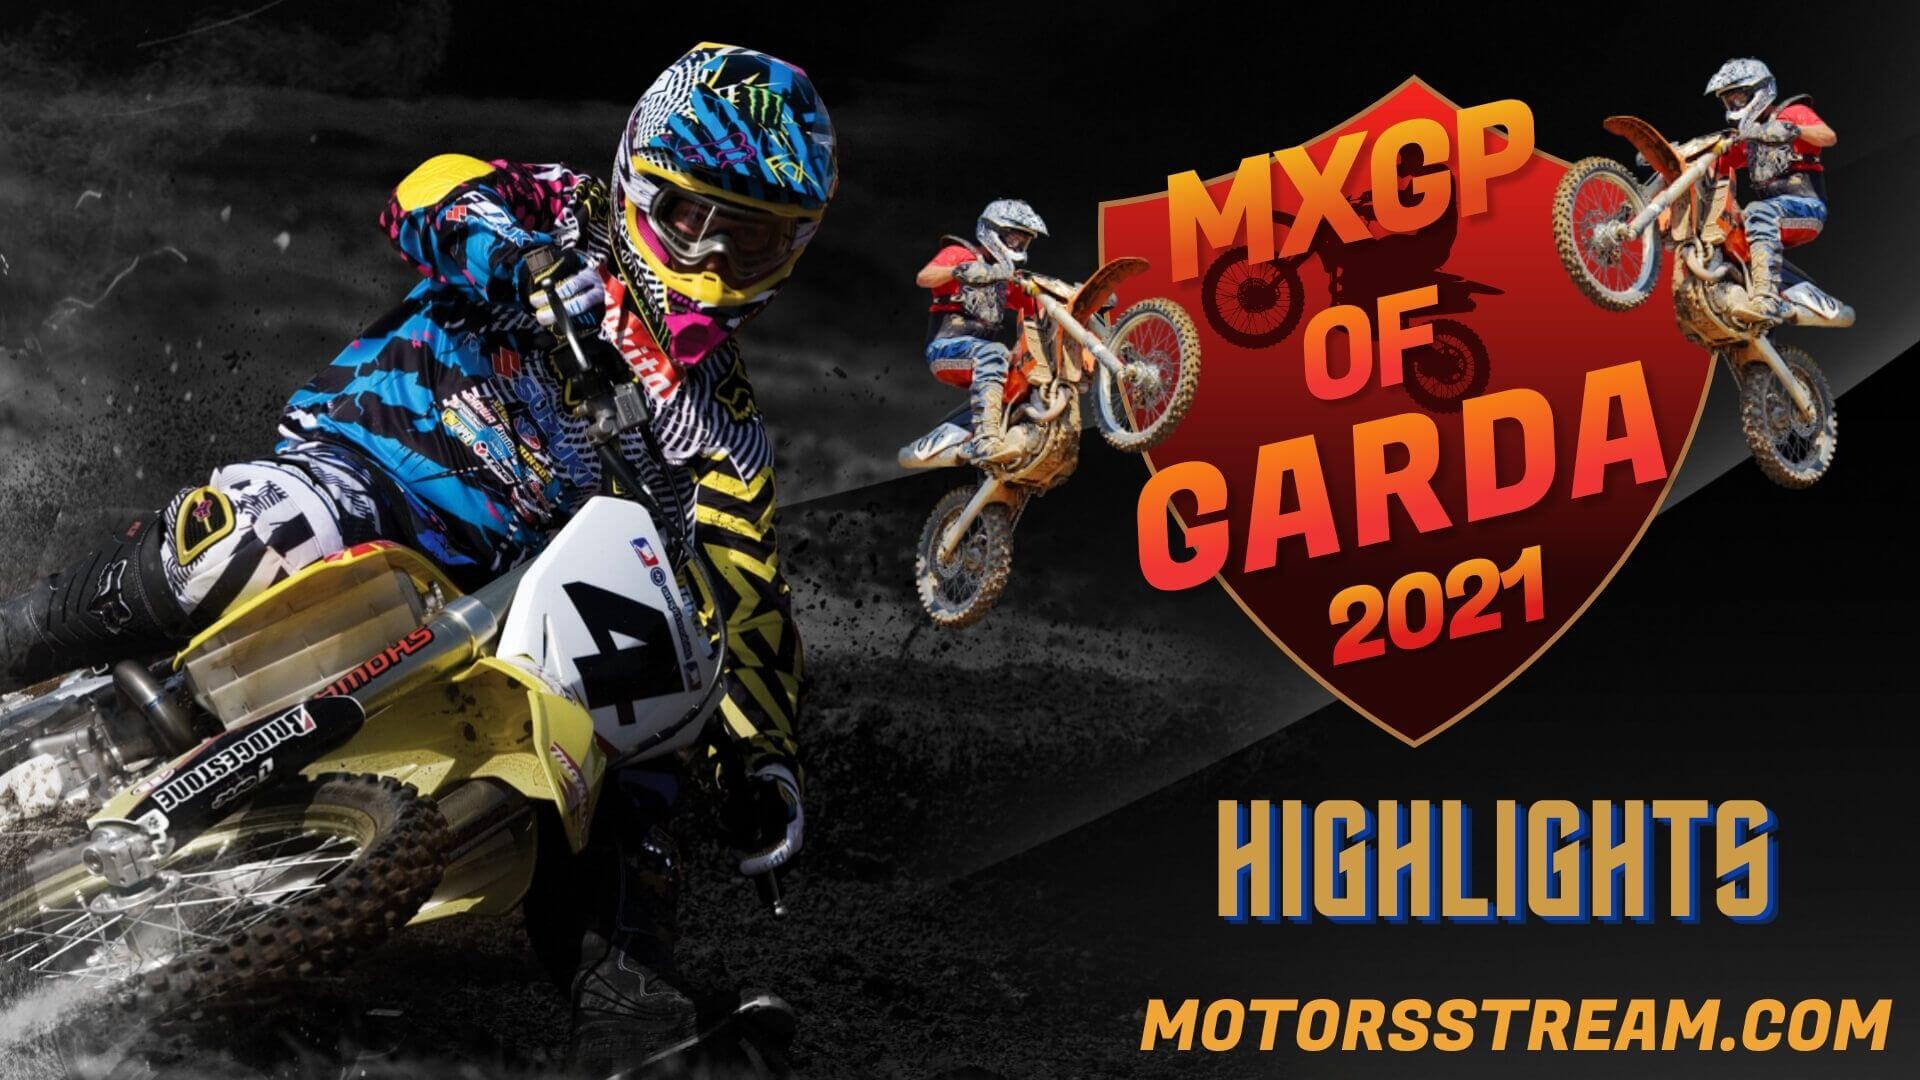 FIM Motocross Garda Highlights 2021 MXGP